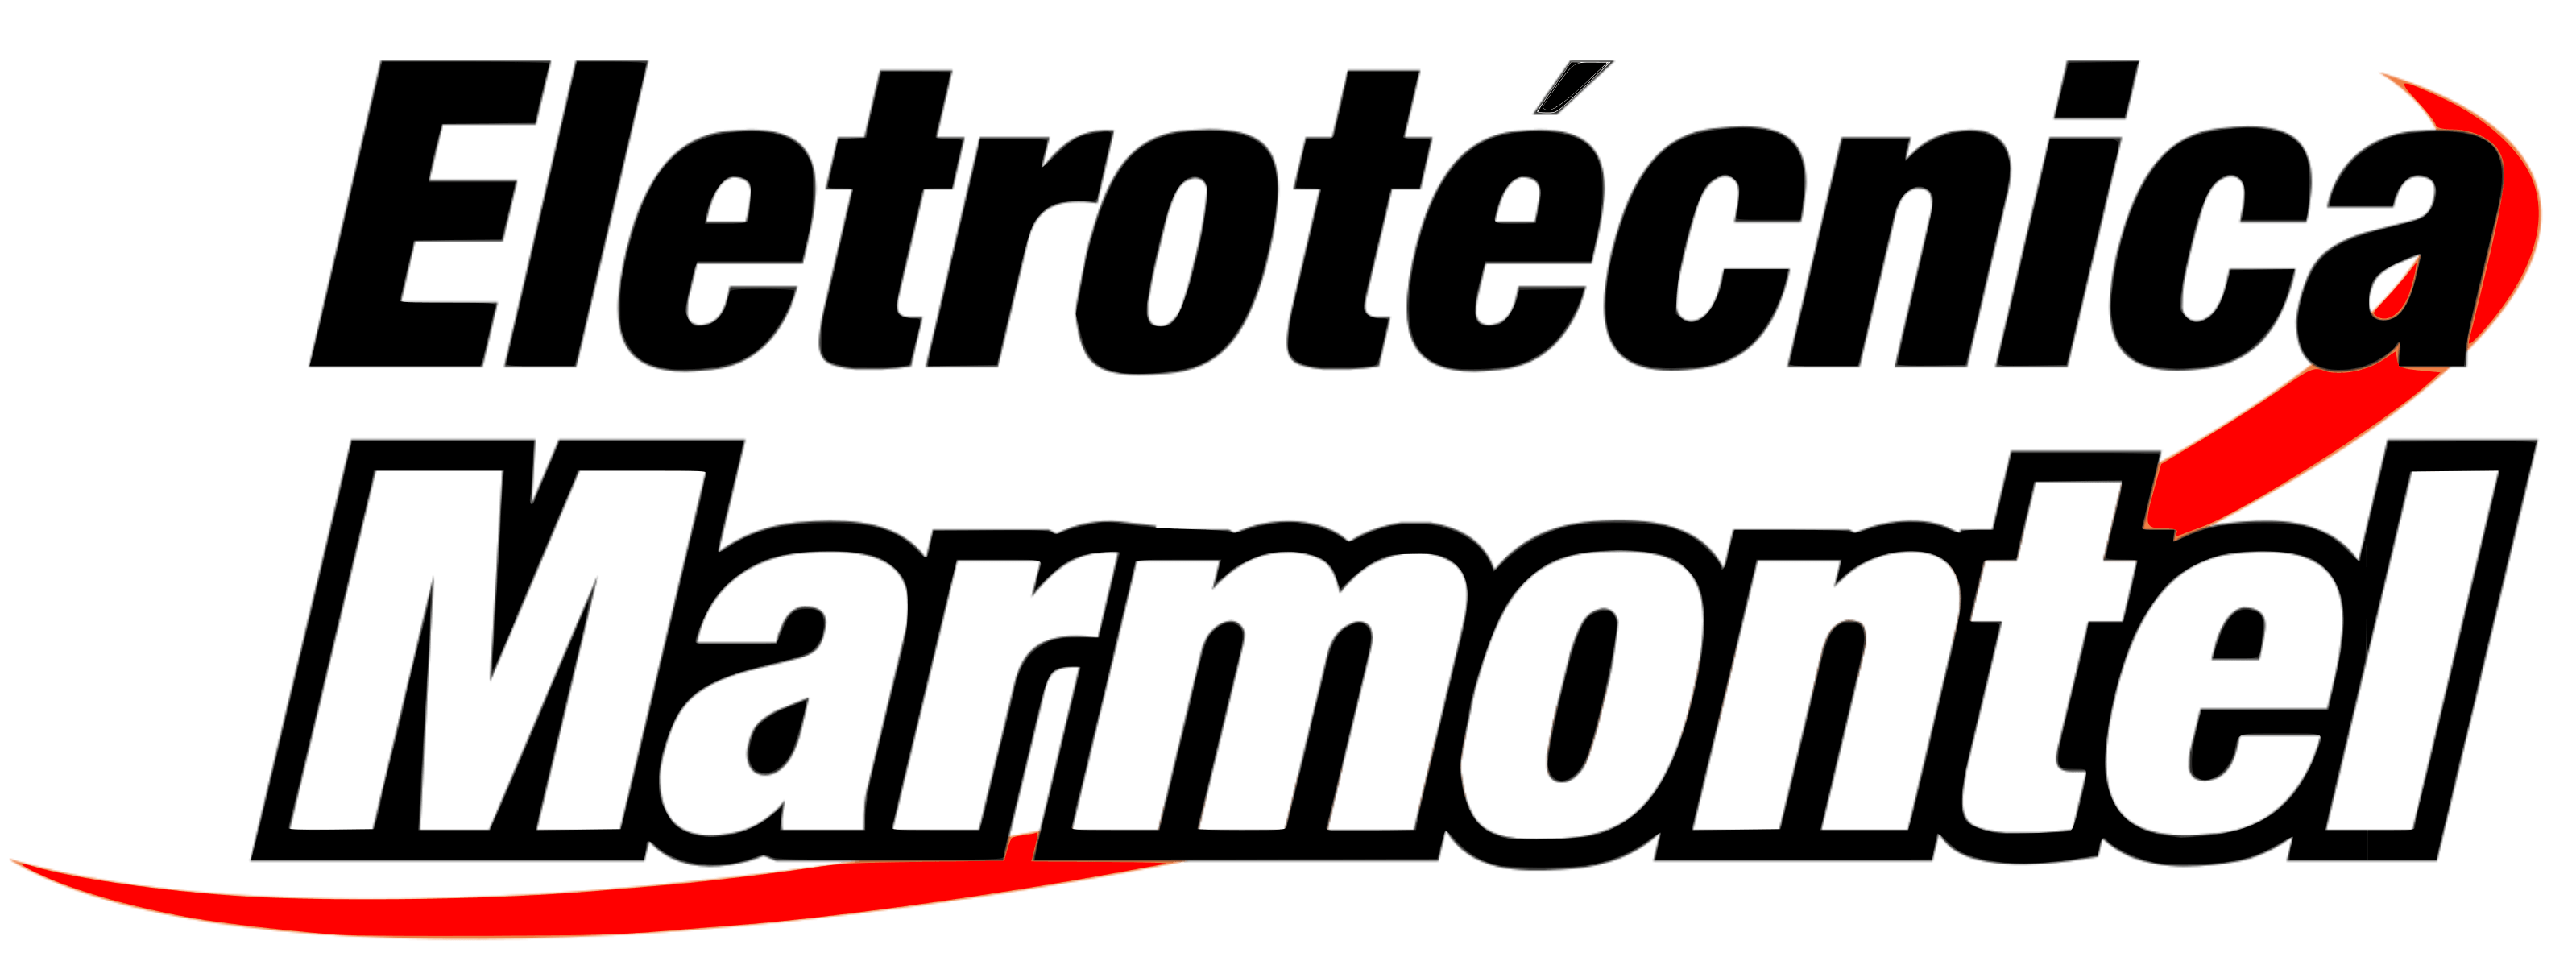 Eletrotécnica Marmontel